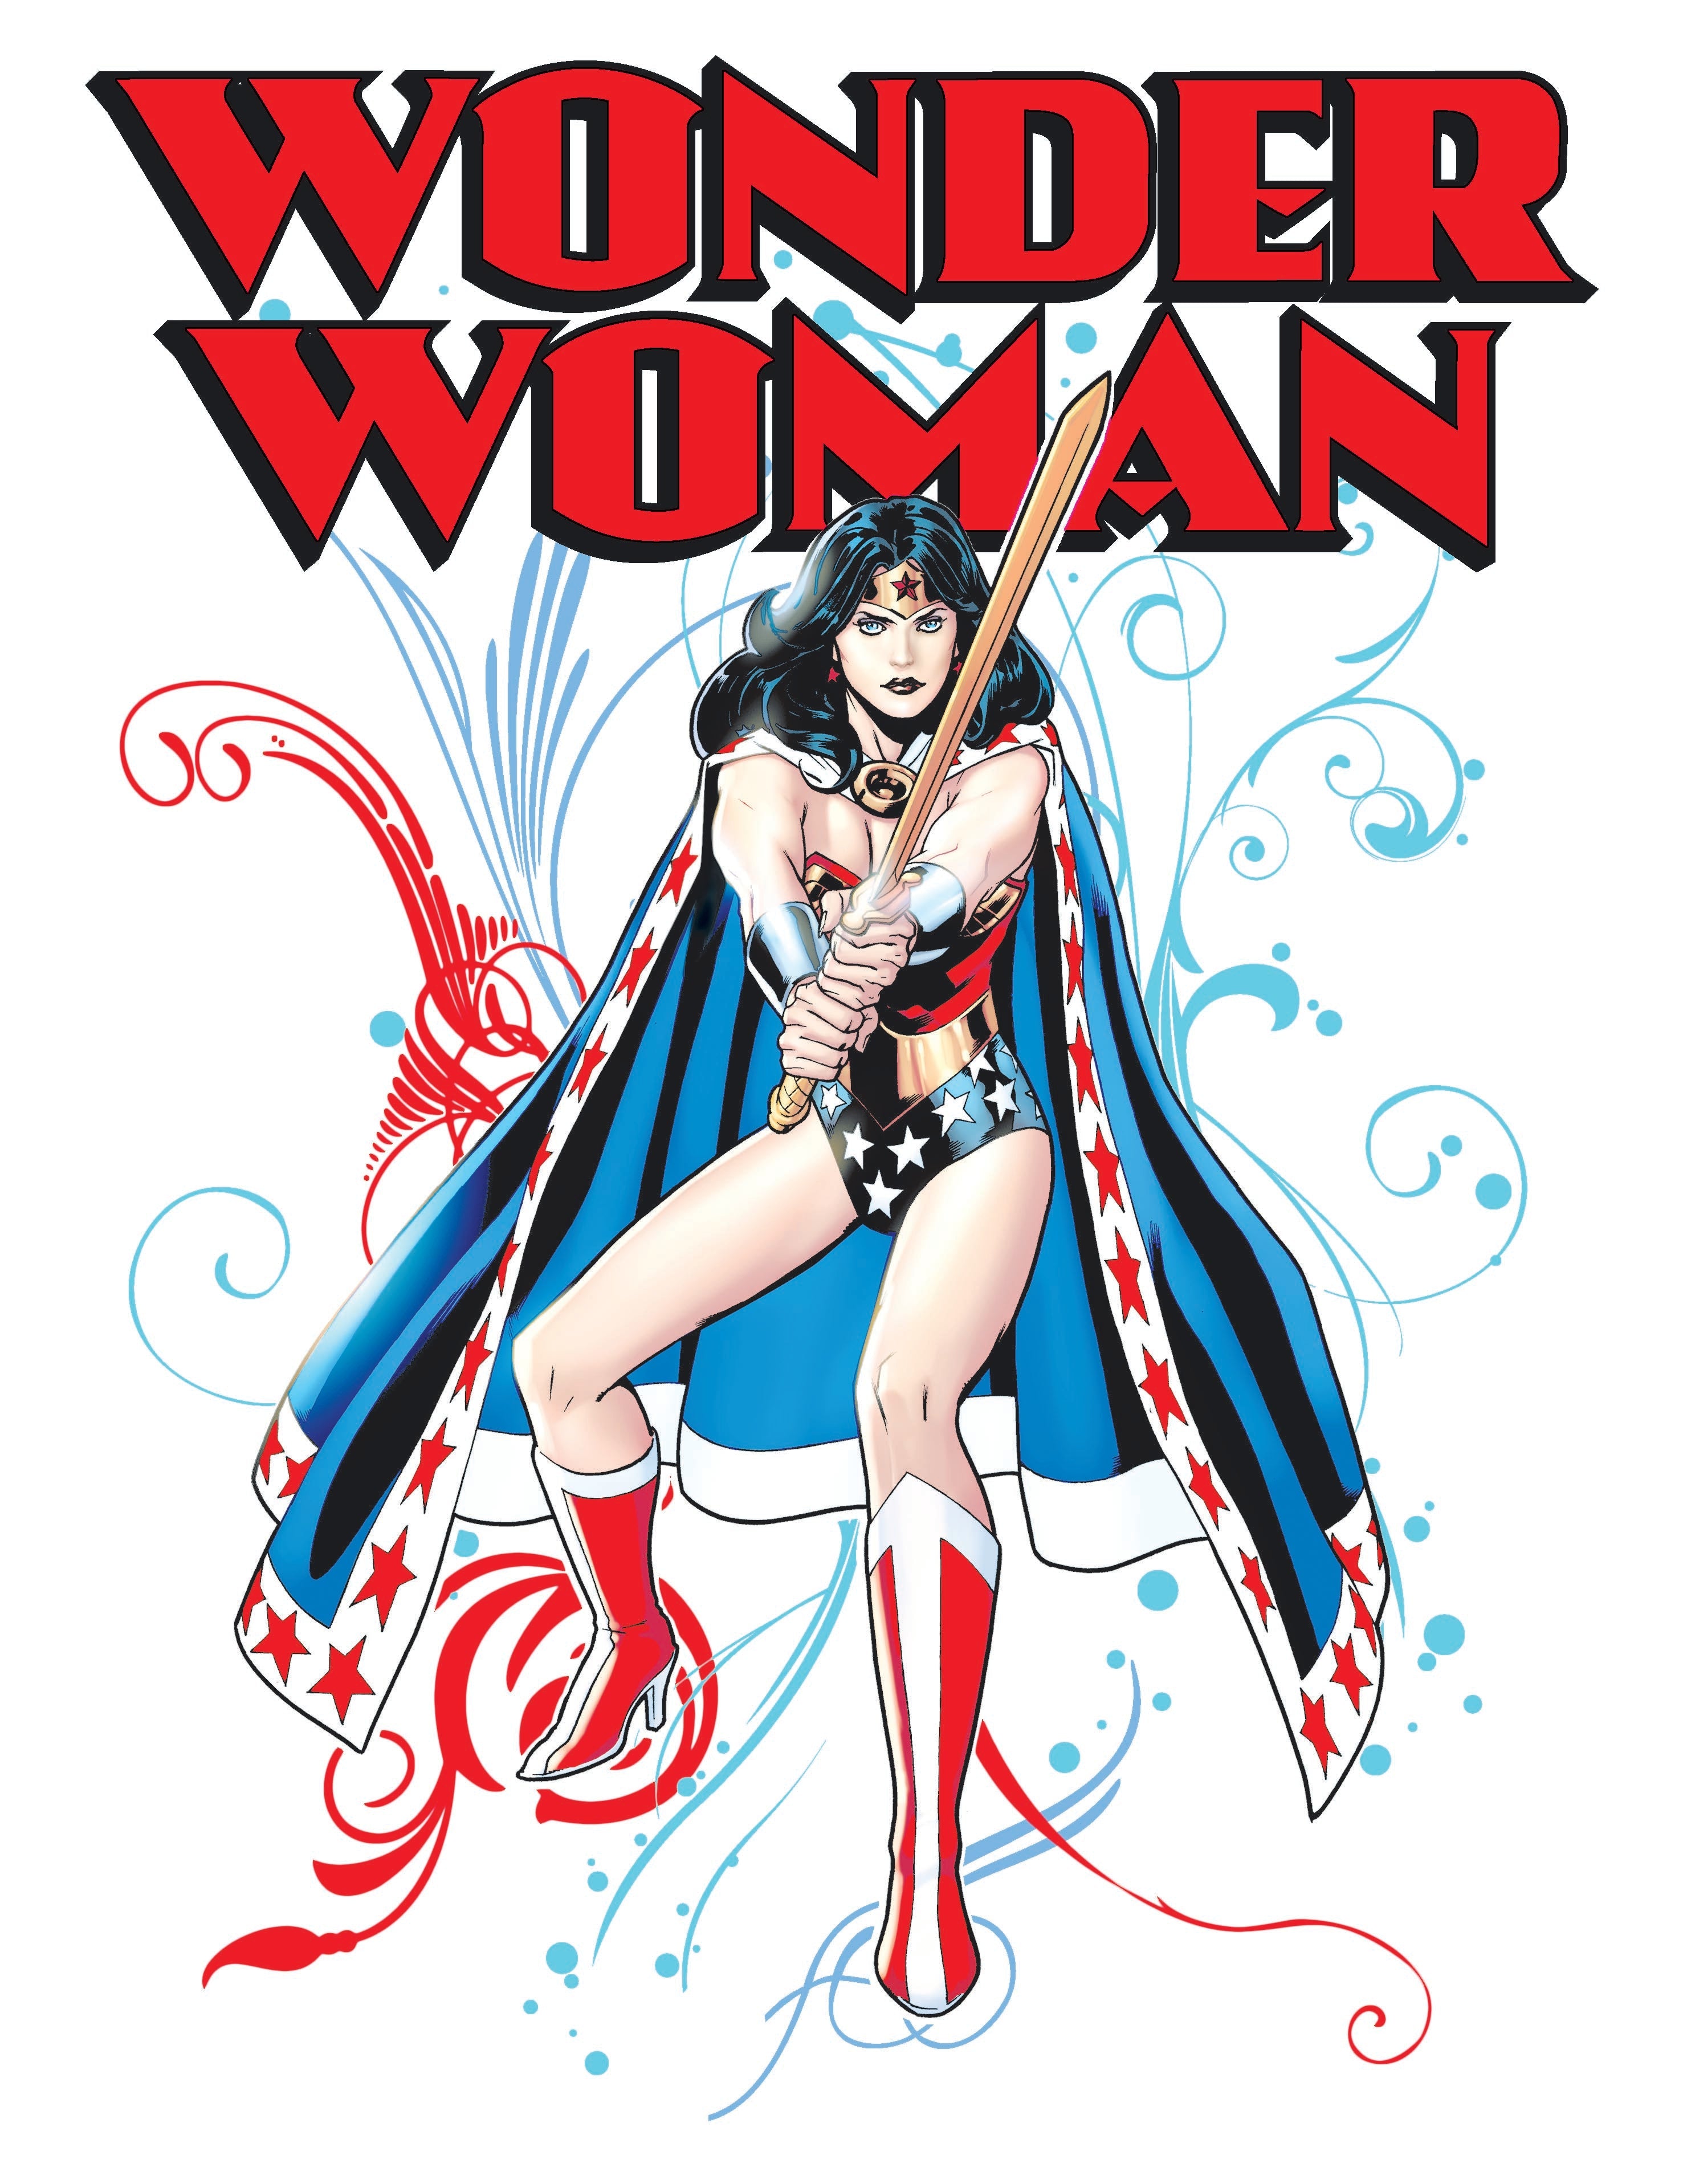 DC Comics Wonder Woman Splash Official Women's T-shirt ()